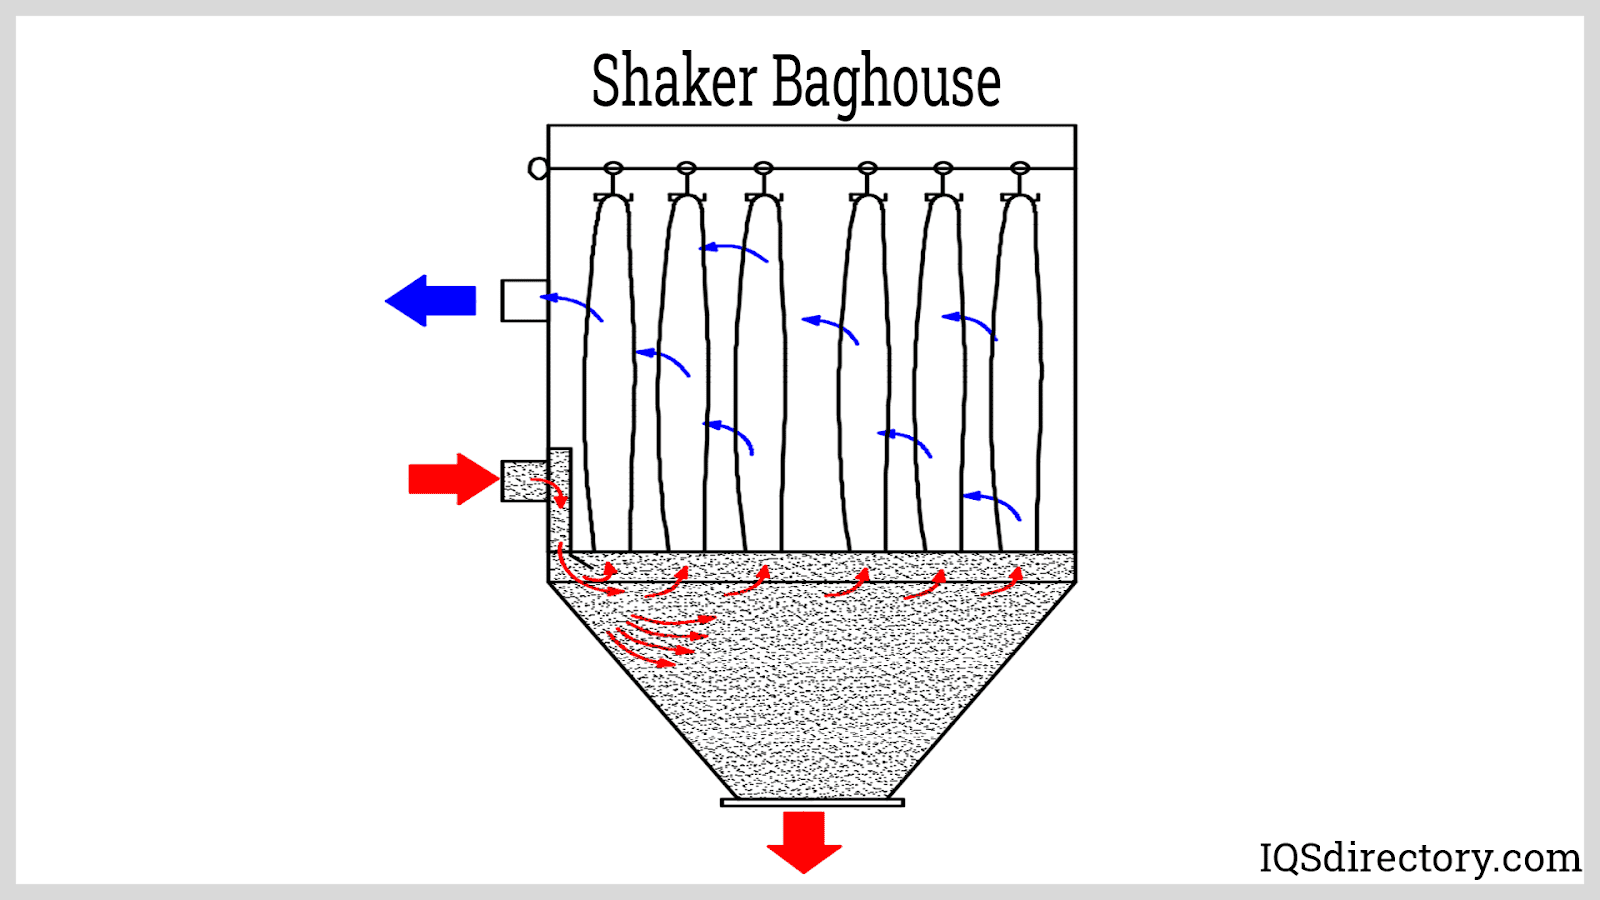 Shaker Baghouse